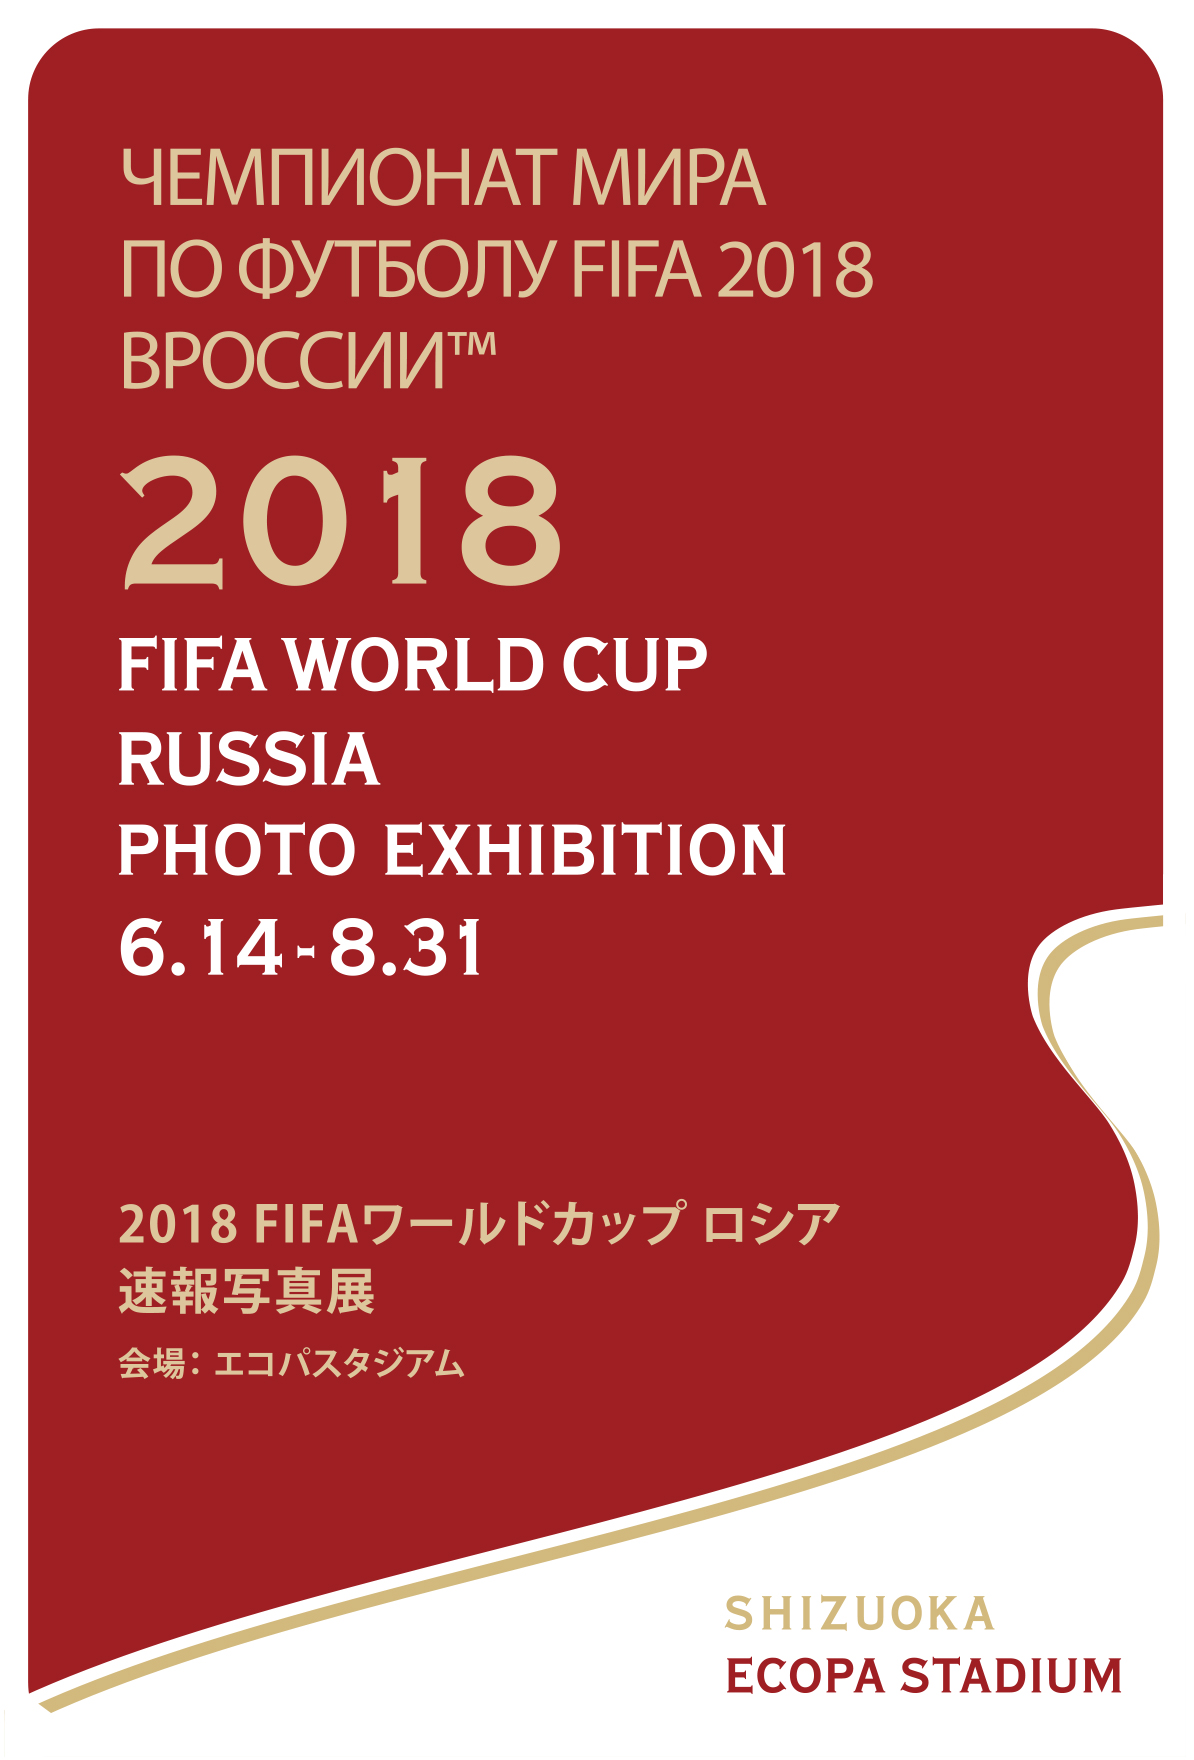 18 Fifaワールドカップ ロシア 速報写真展 8 31まで開催 エコパ公式ウェブサイト 小笠山総合運動公園ecopa